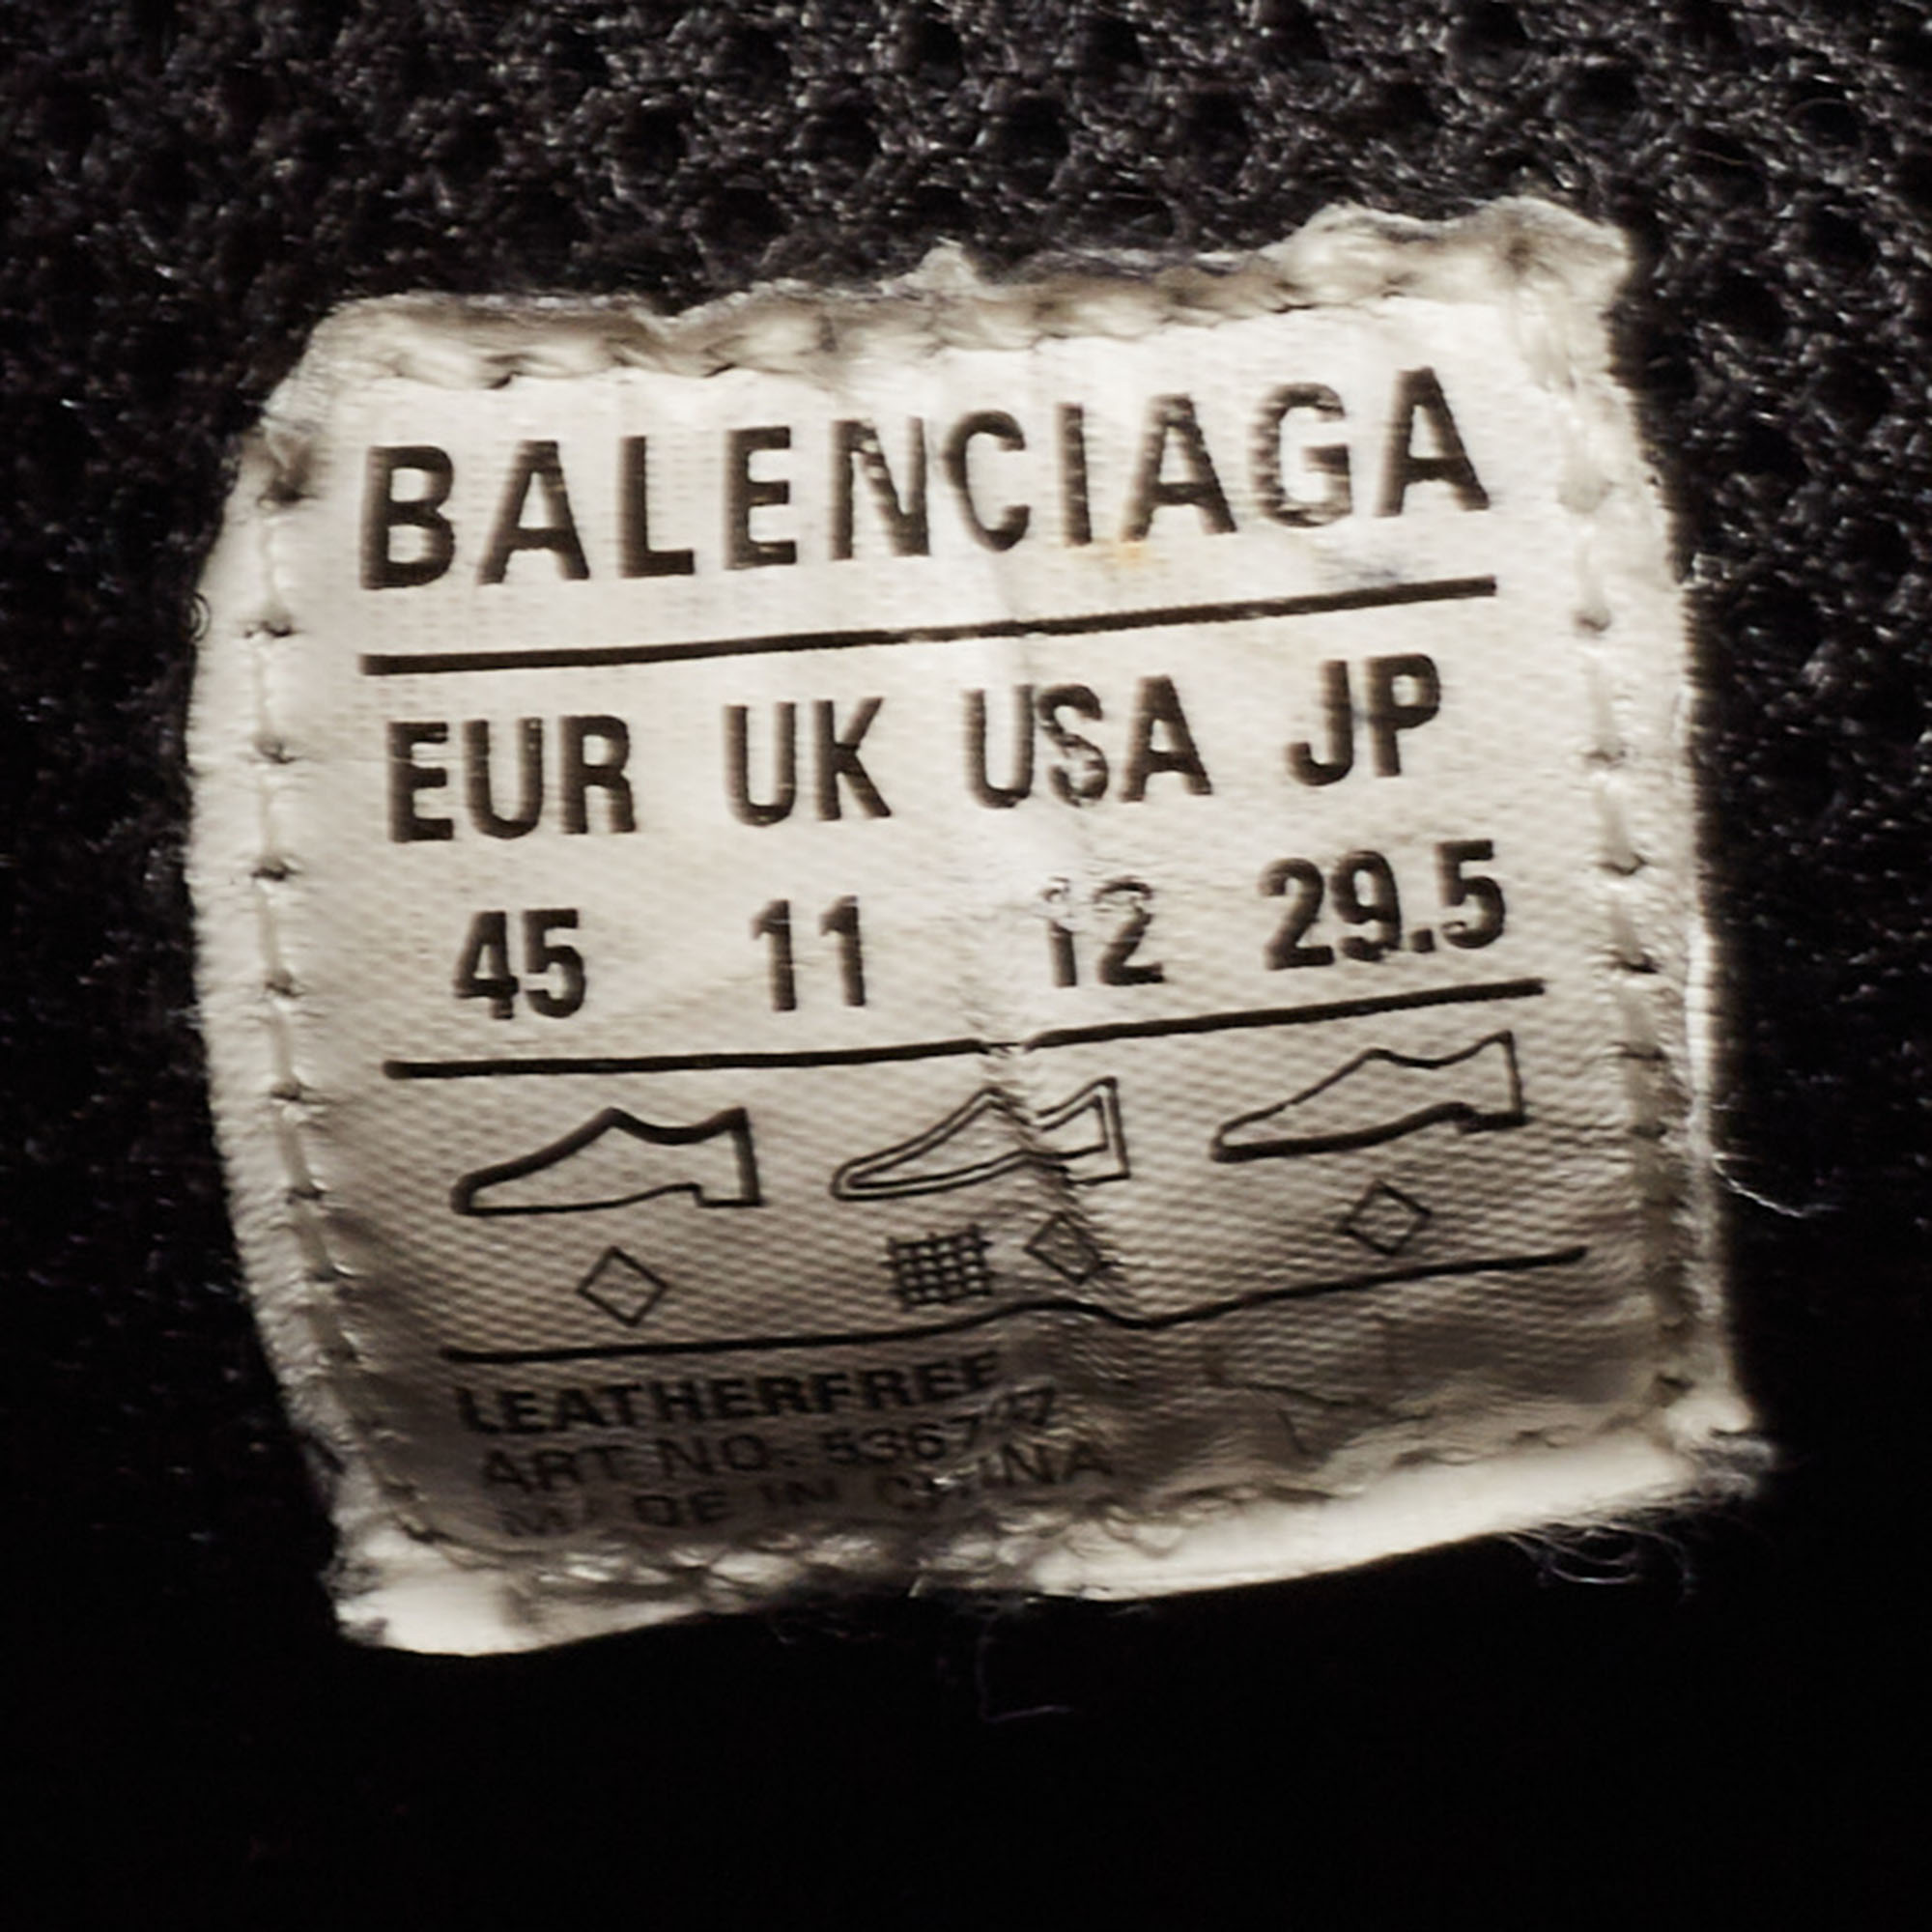 Balenciaga Black Leather Triple S Sneakers Size 45